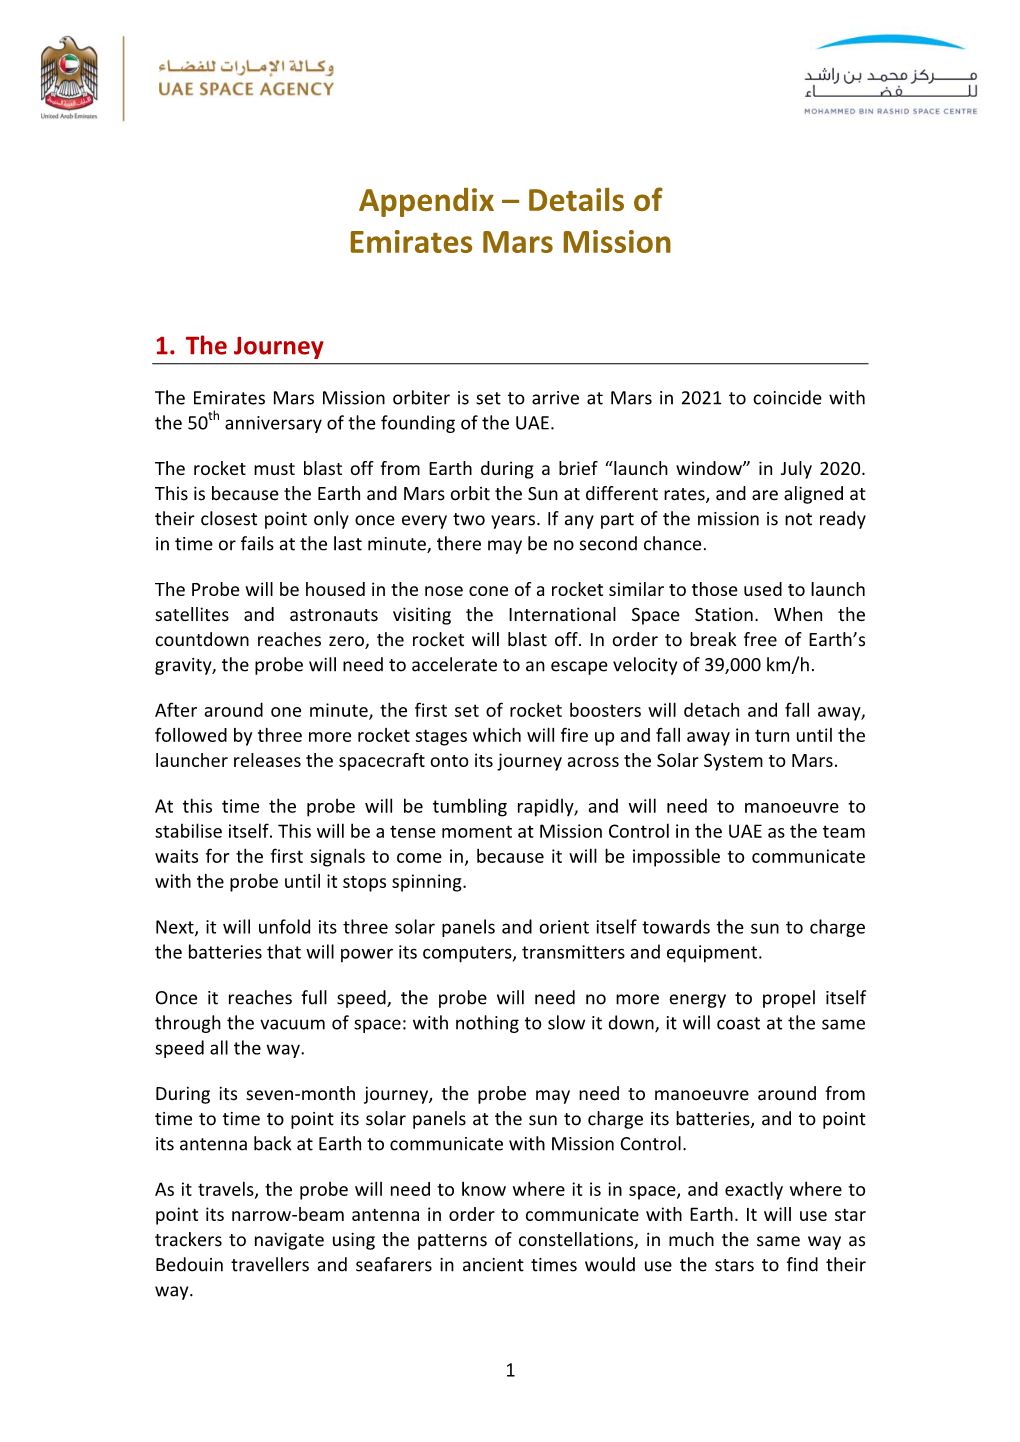 Appendix – Details of Emirates Mars Mission